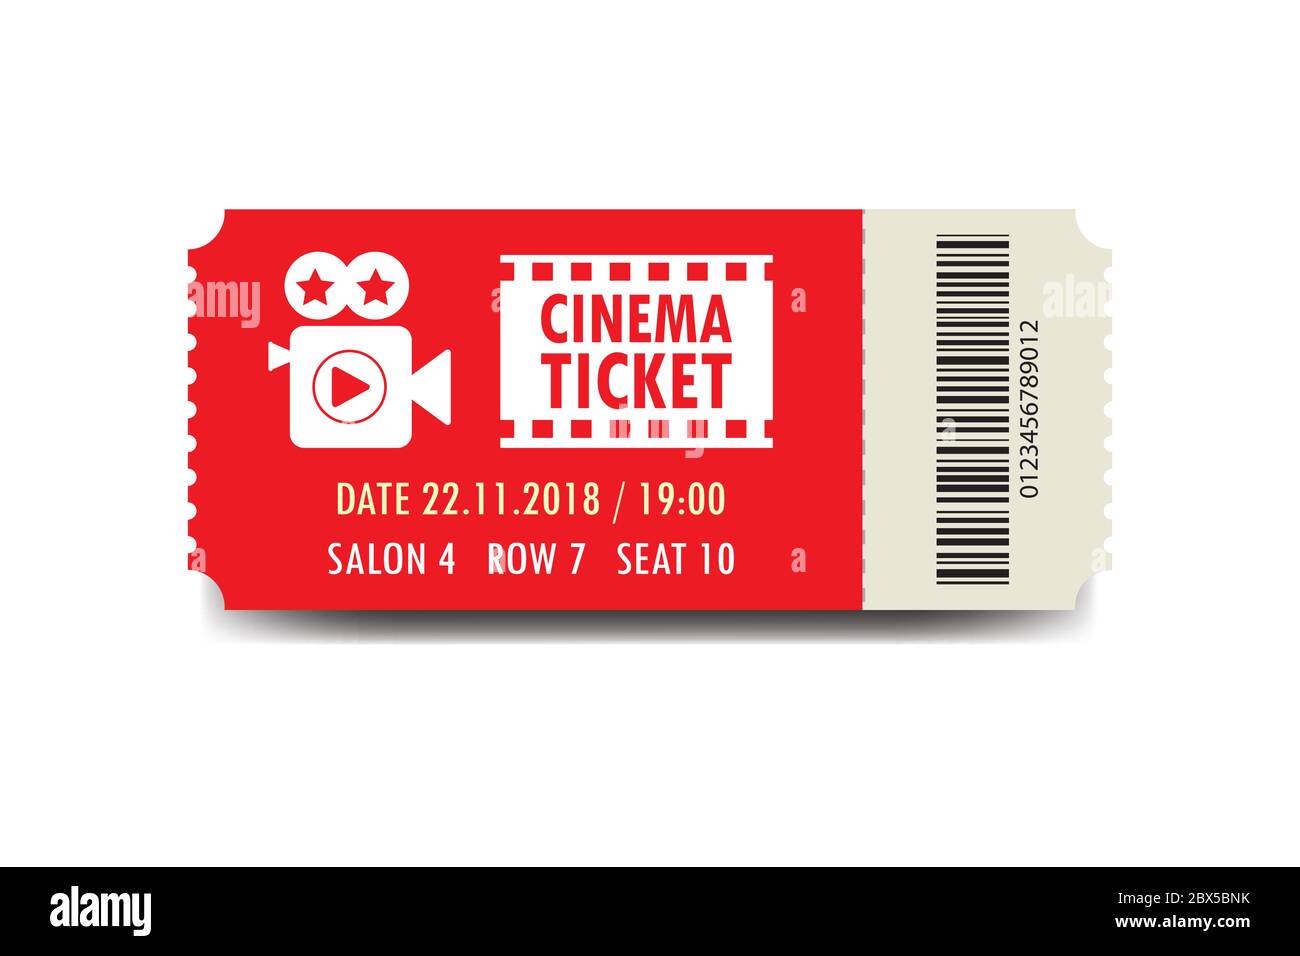 Cinema ticket template,flat vector illustration Stock Vector